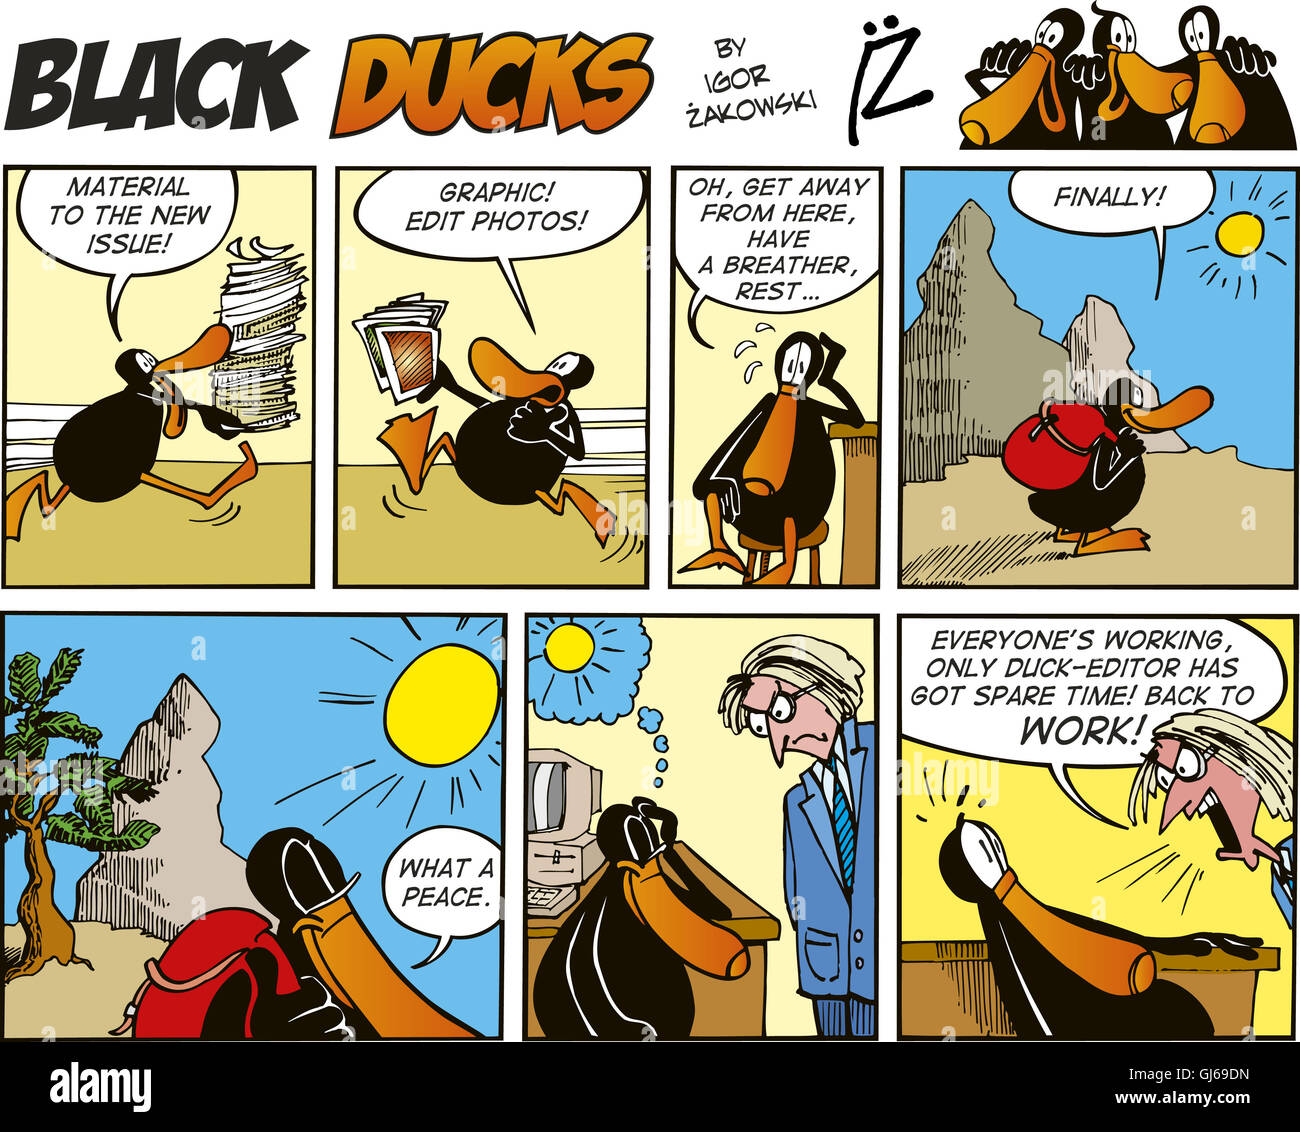 Black Ducks Comics episode 54 Stock Photo